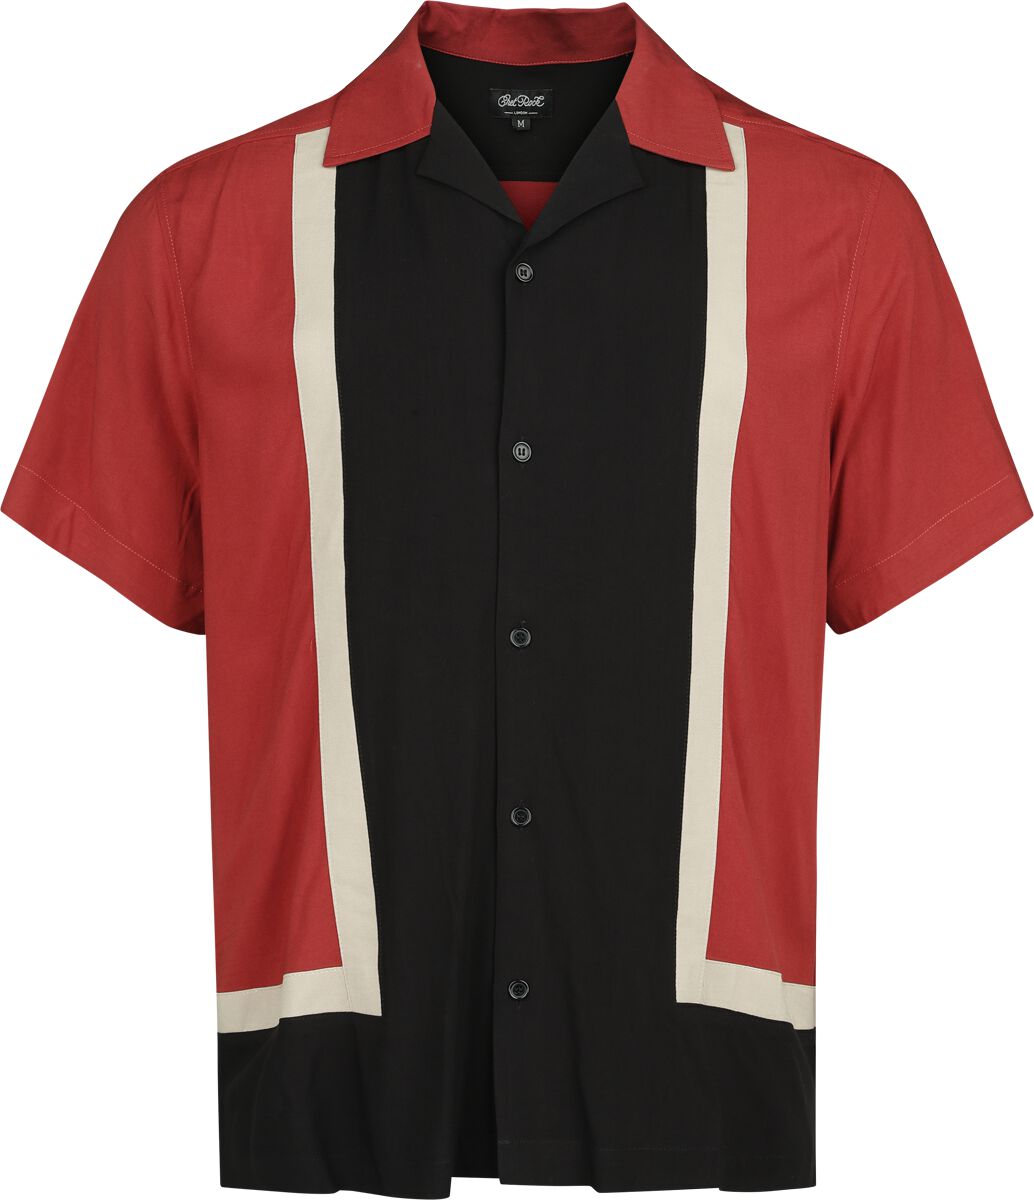 Chet Rock - Rockabilly Kurzarmhemd - Walter Bowling Shirt - S bis XL - für Männer - Größe L - rot/schwarz